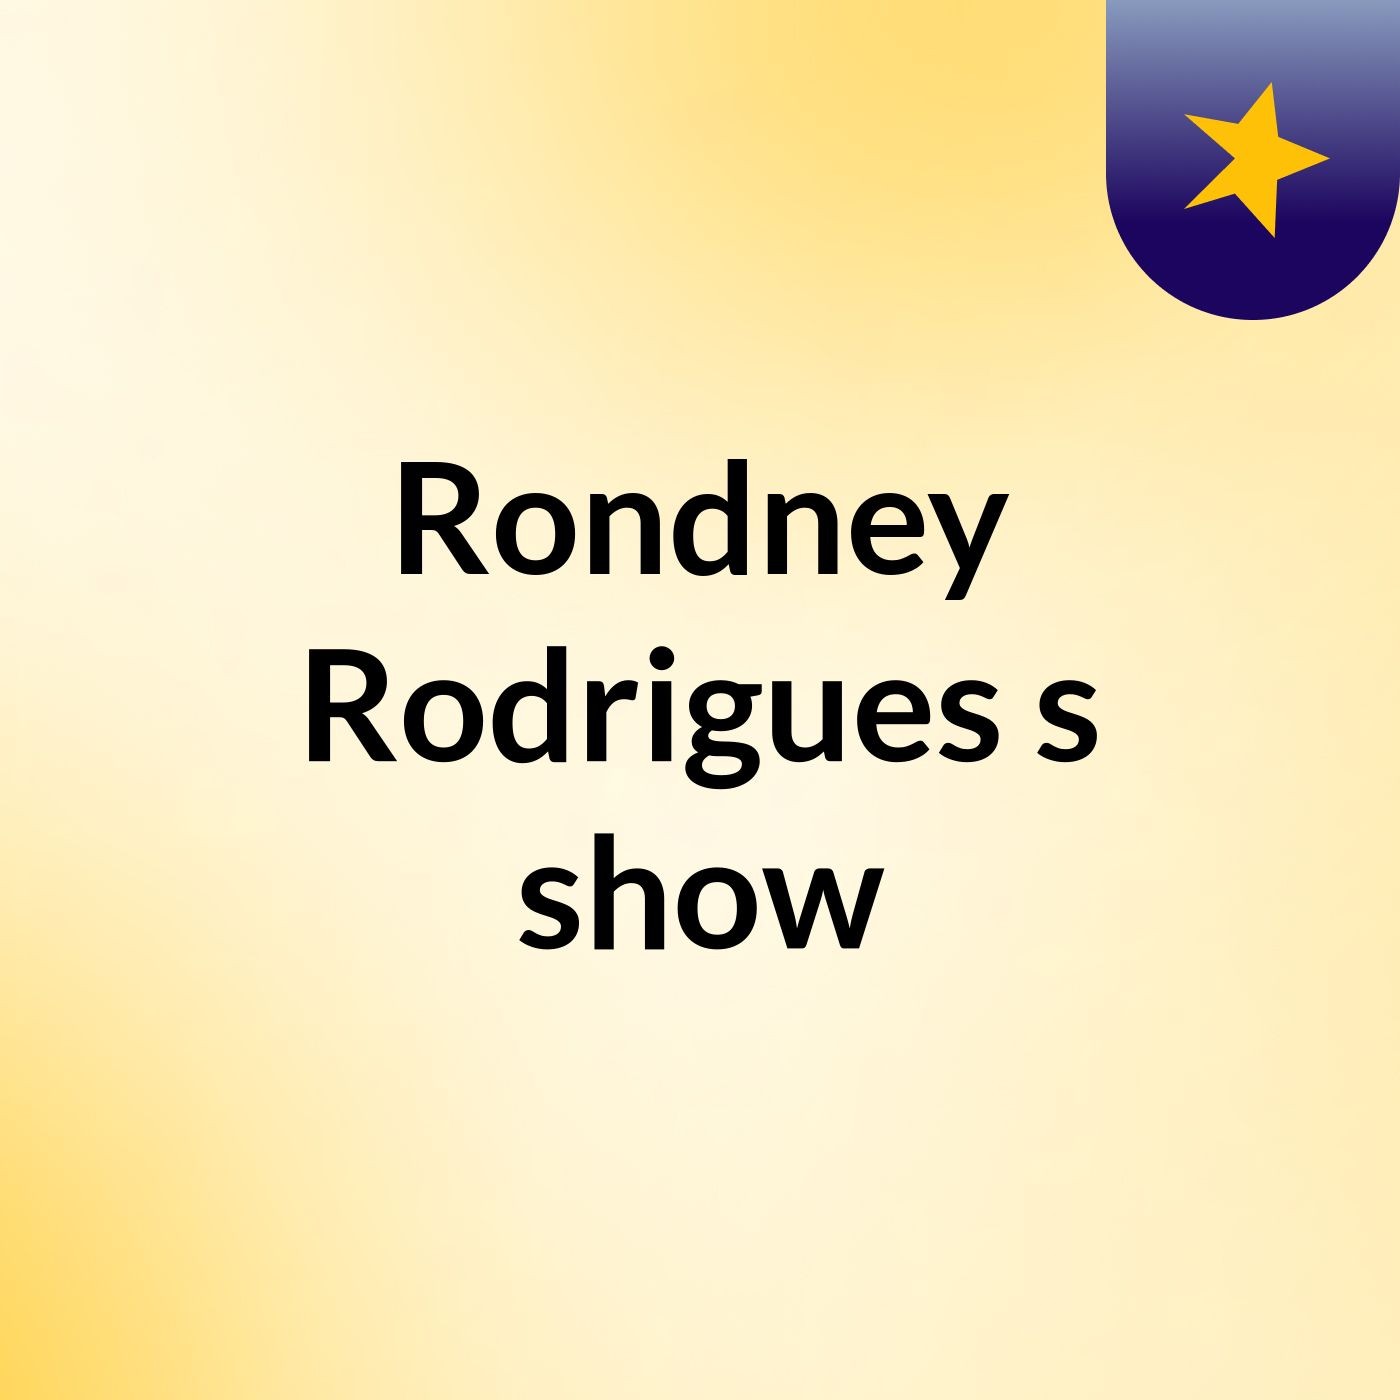 Rondney Rodrigues's show